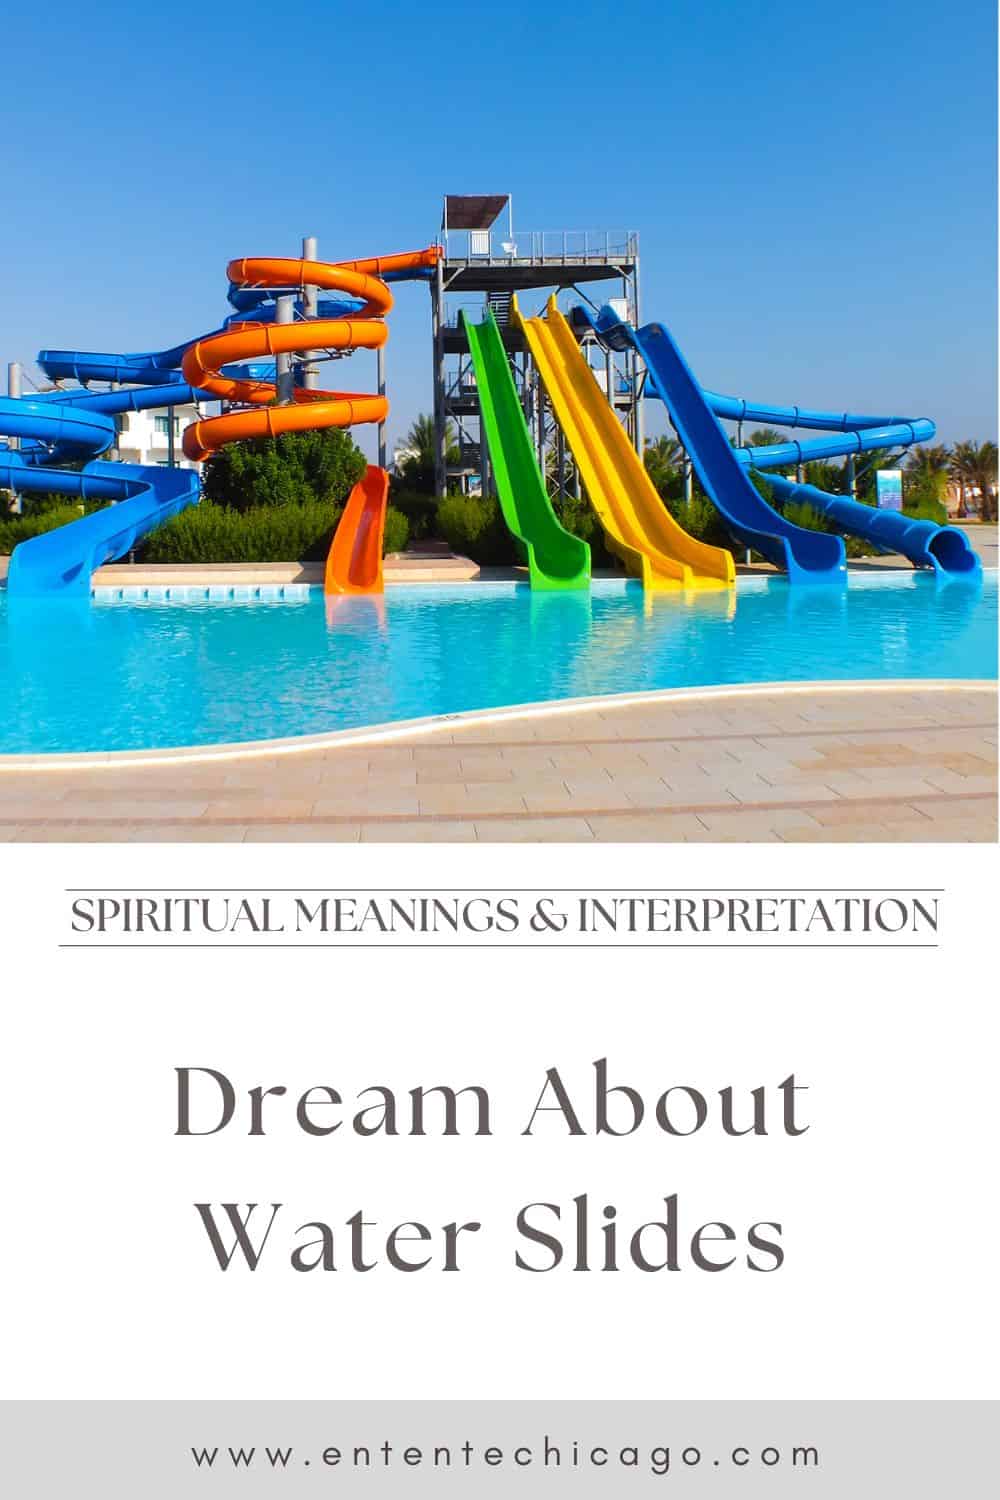 General Interpretations of Dreams About Water Slides